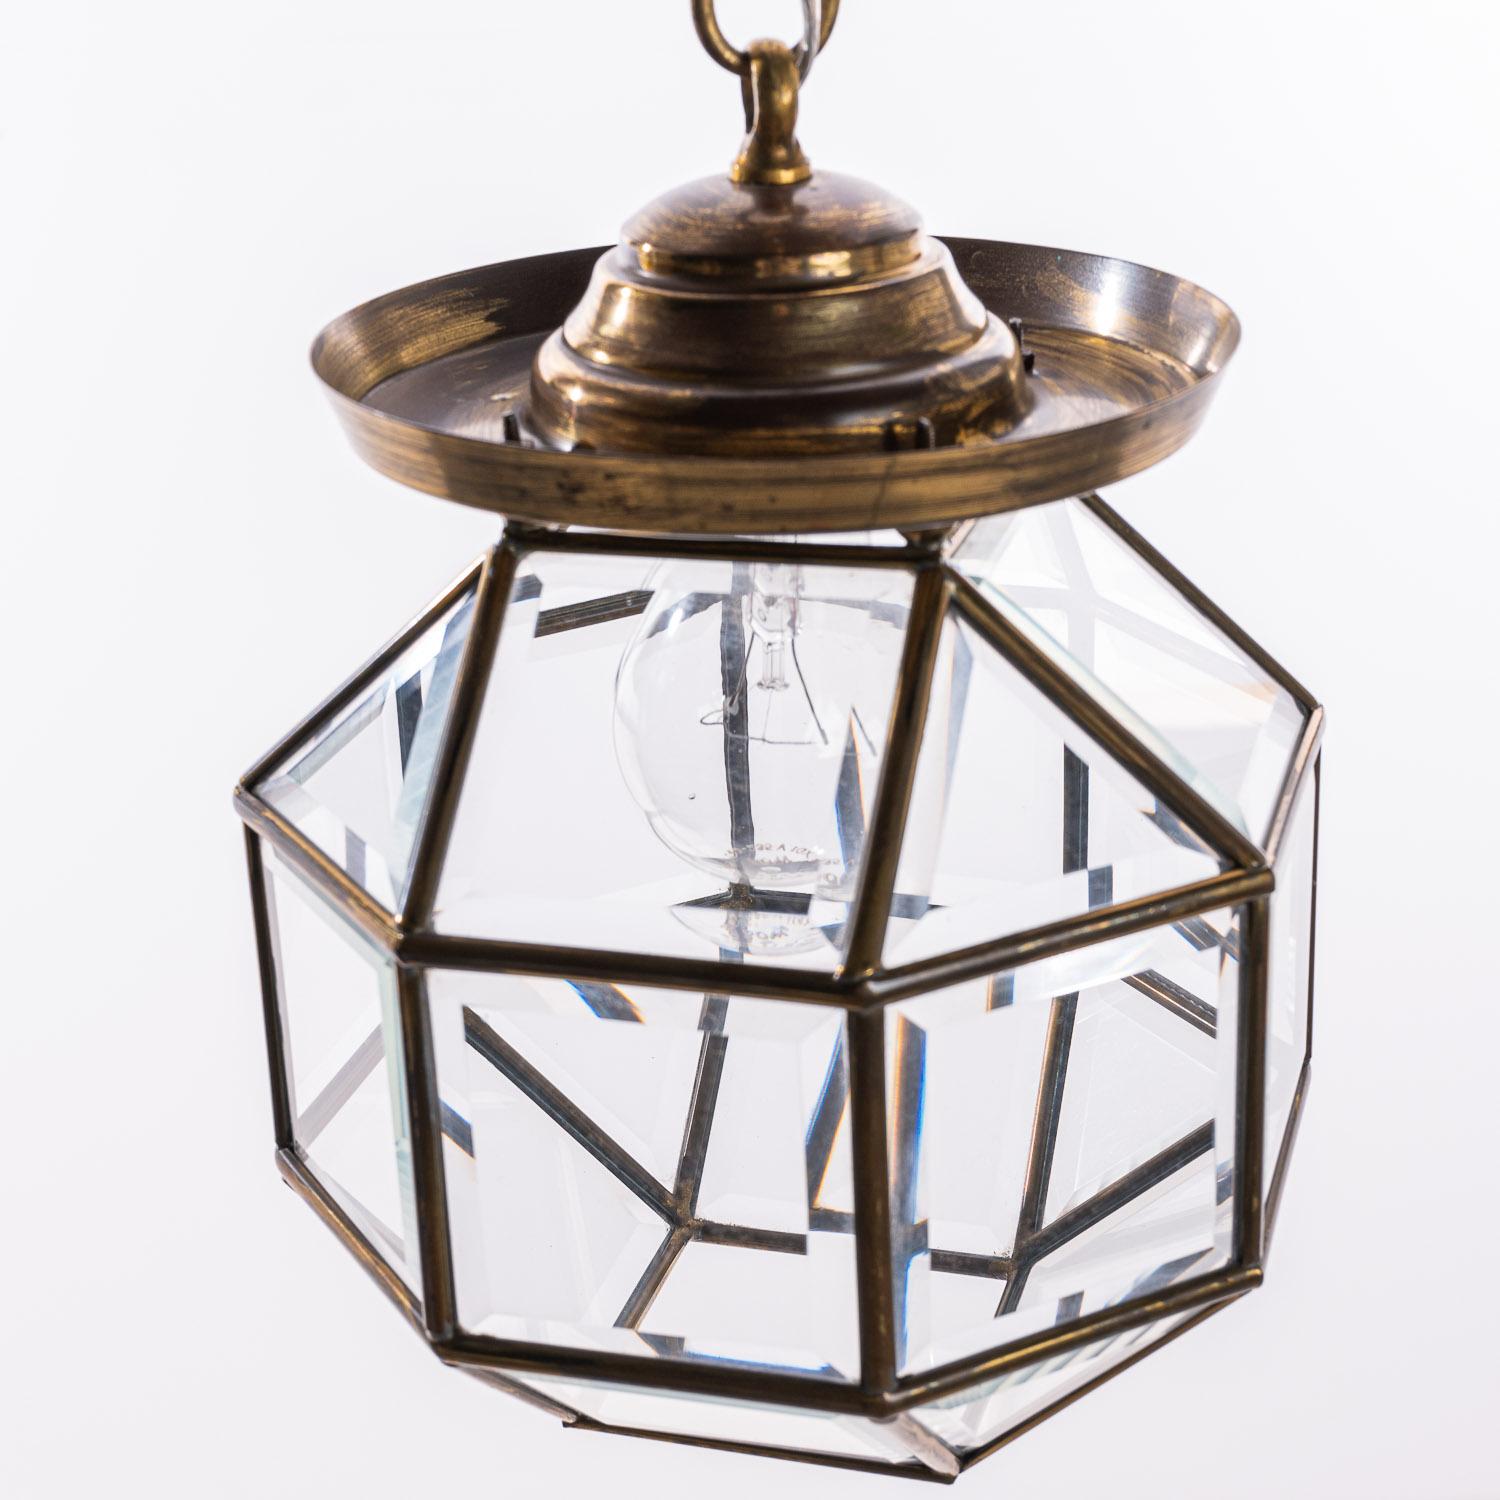 1900-1920 Brass & Glass Amsterdam School Lantern For Sale 4